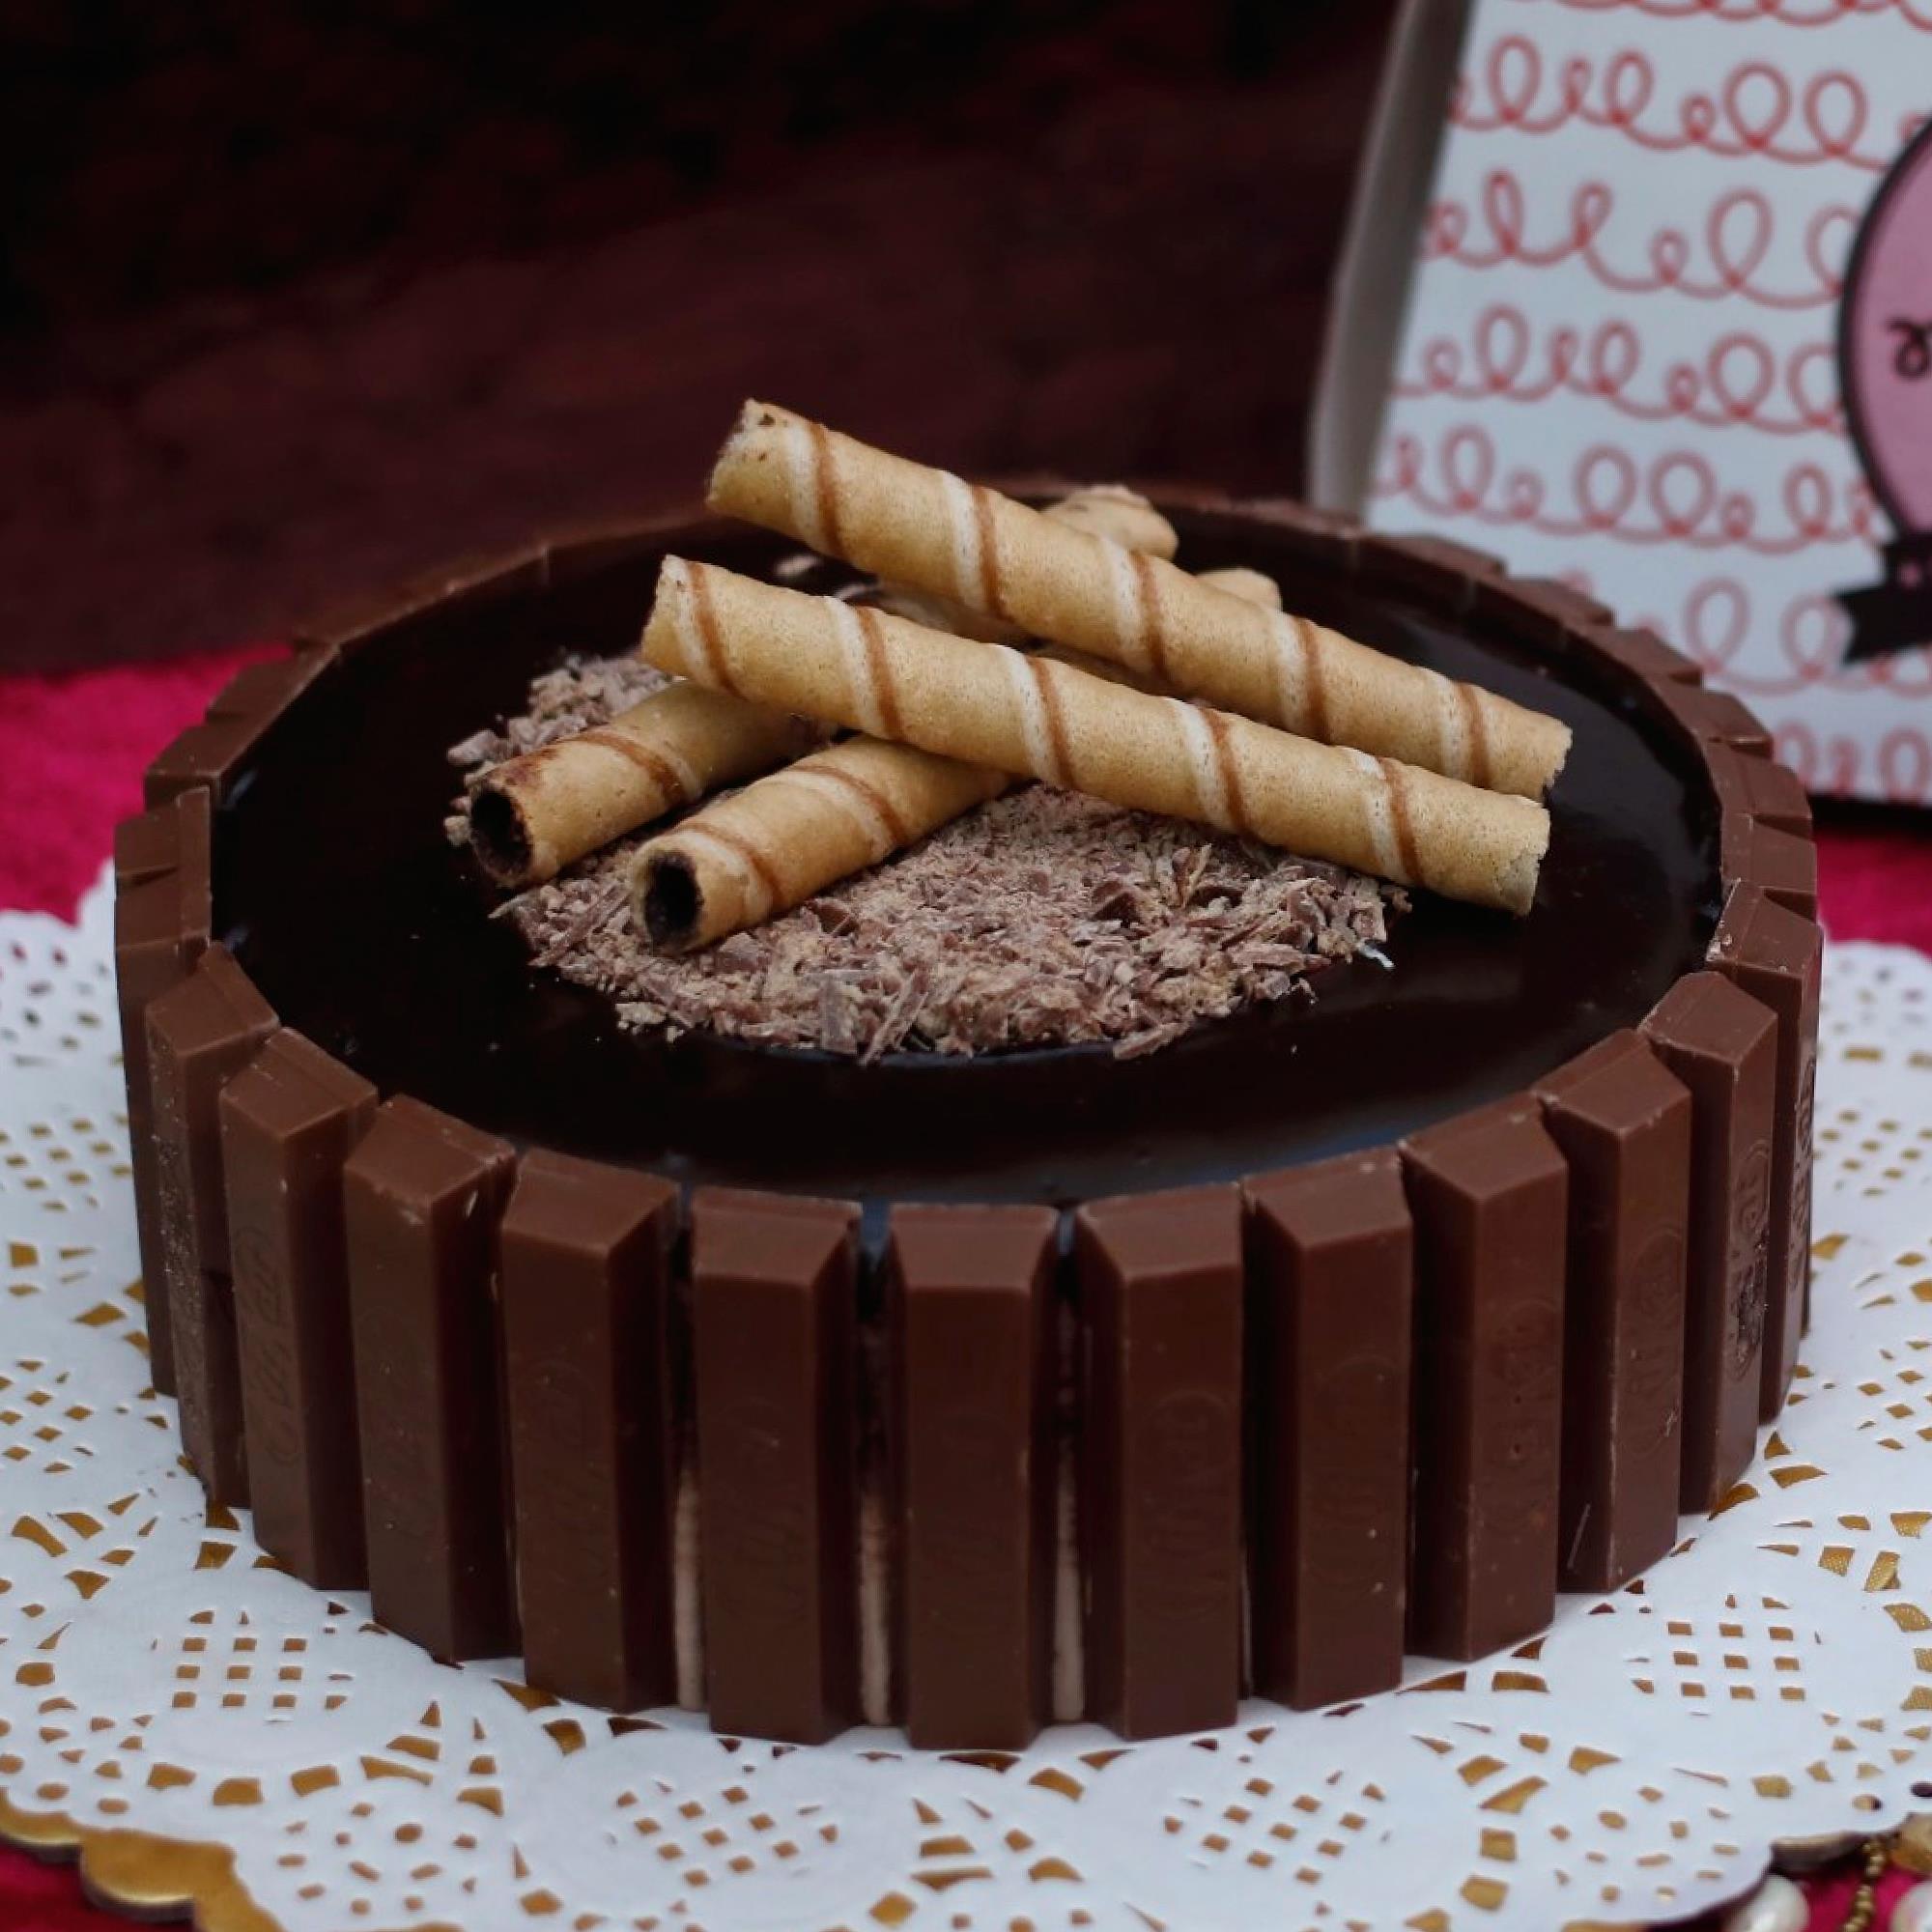 Yule Log Cake 1 KG - GiftBag.ae - Online Gift Delivery in Dubai